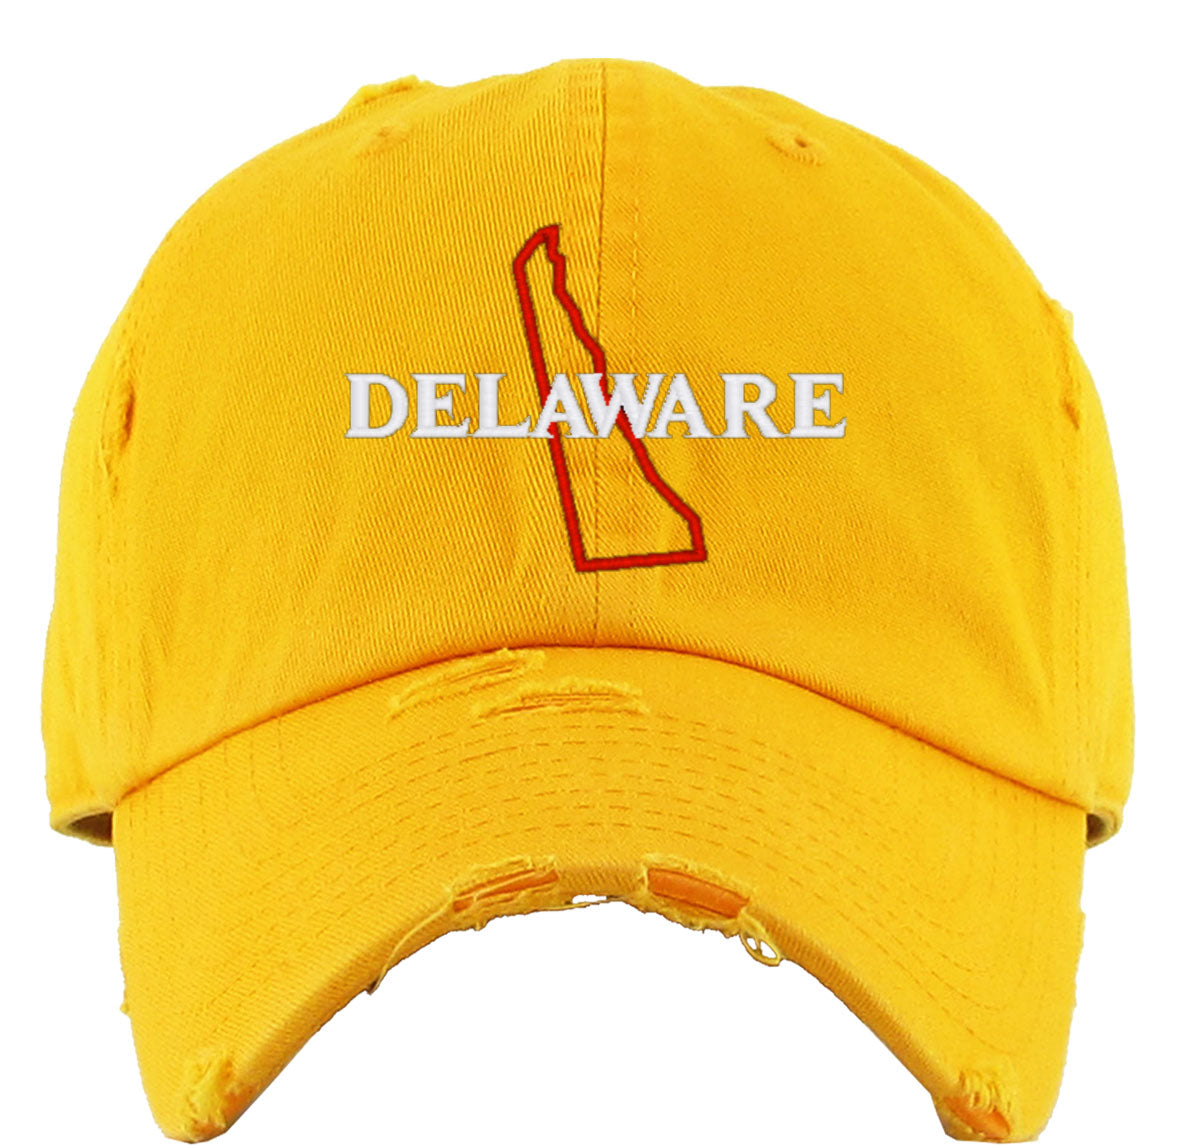 Delaware Vintage Baseball Cap